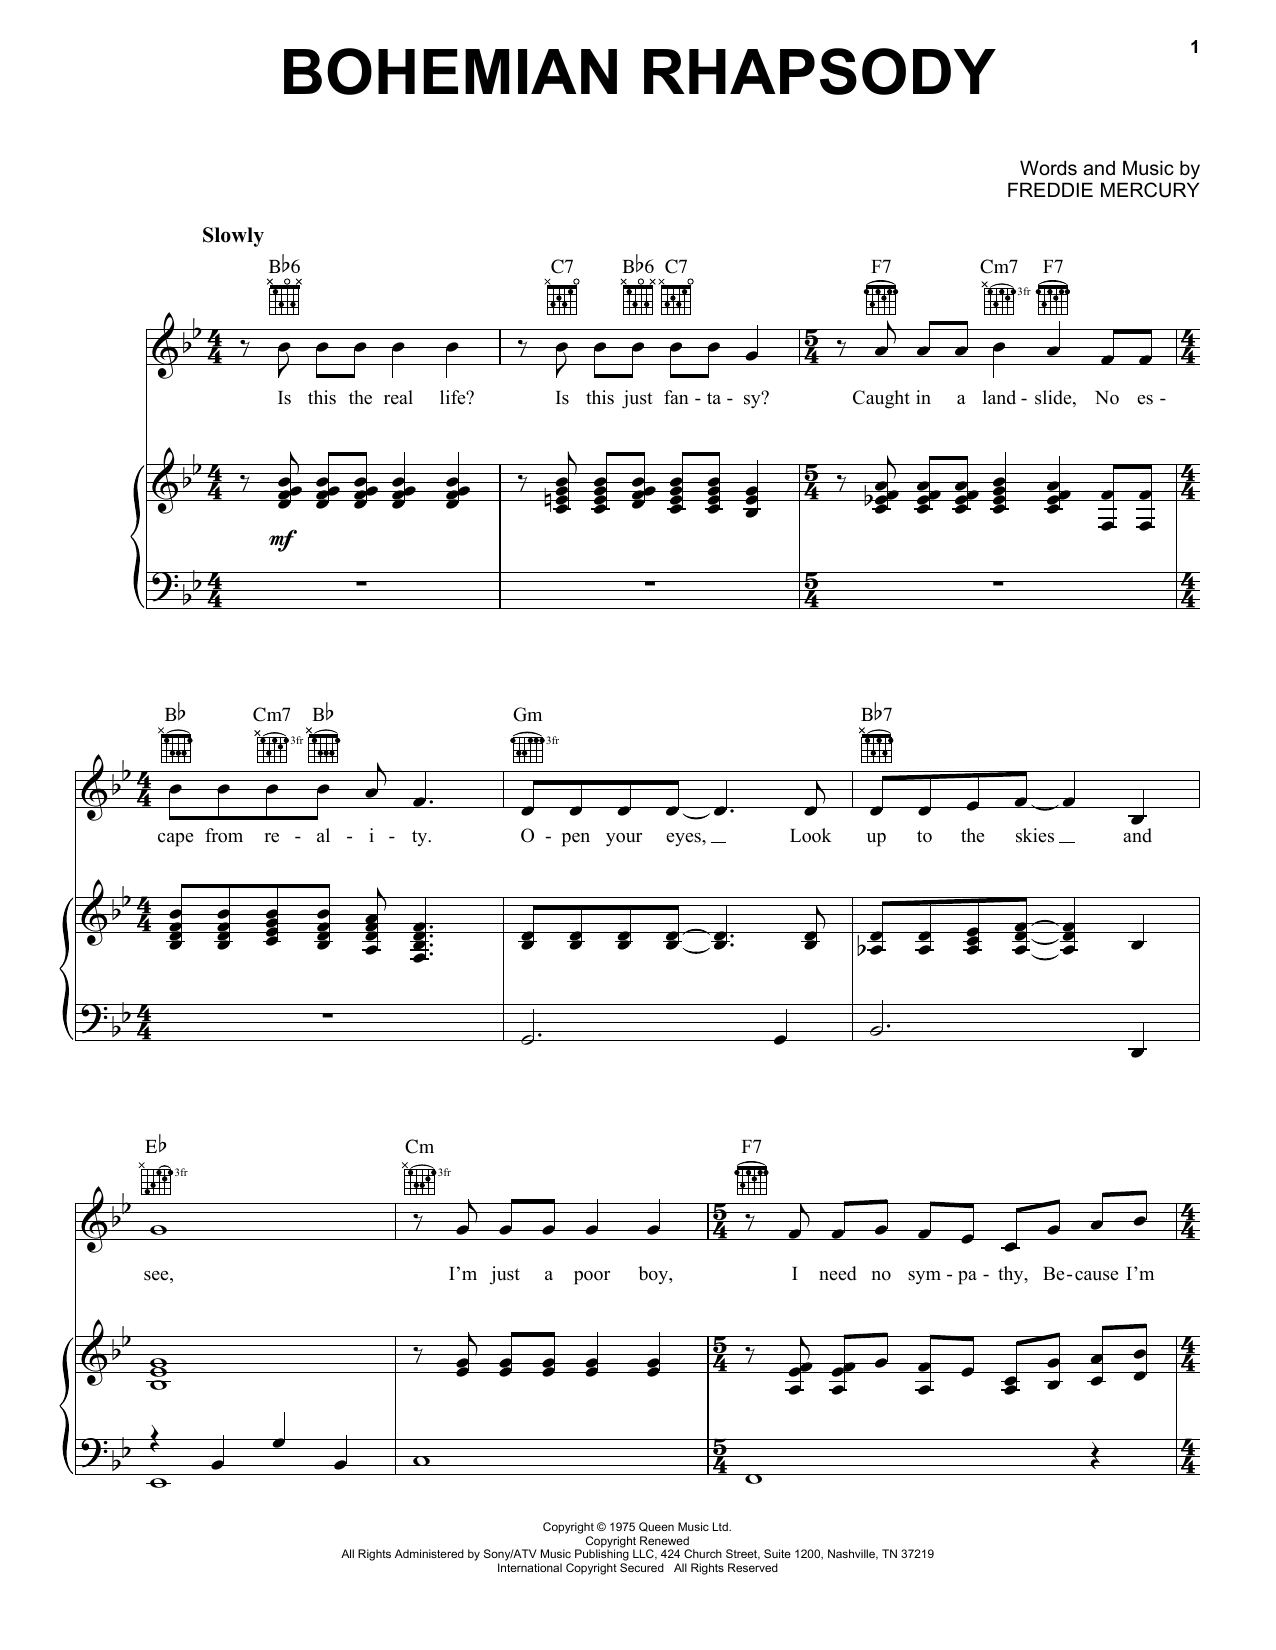 Queen Bohemian Rhapsody Sheet Music Notes & Chords for Lyrics & Chords - Download or Print PDF